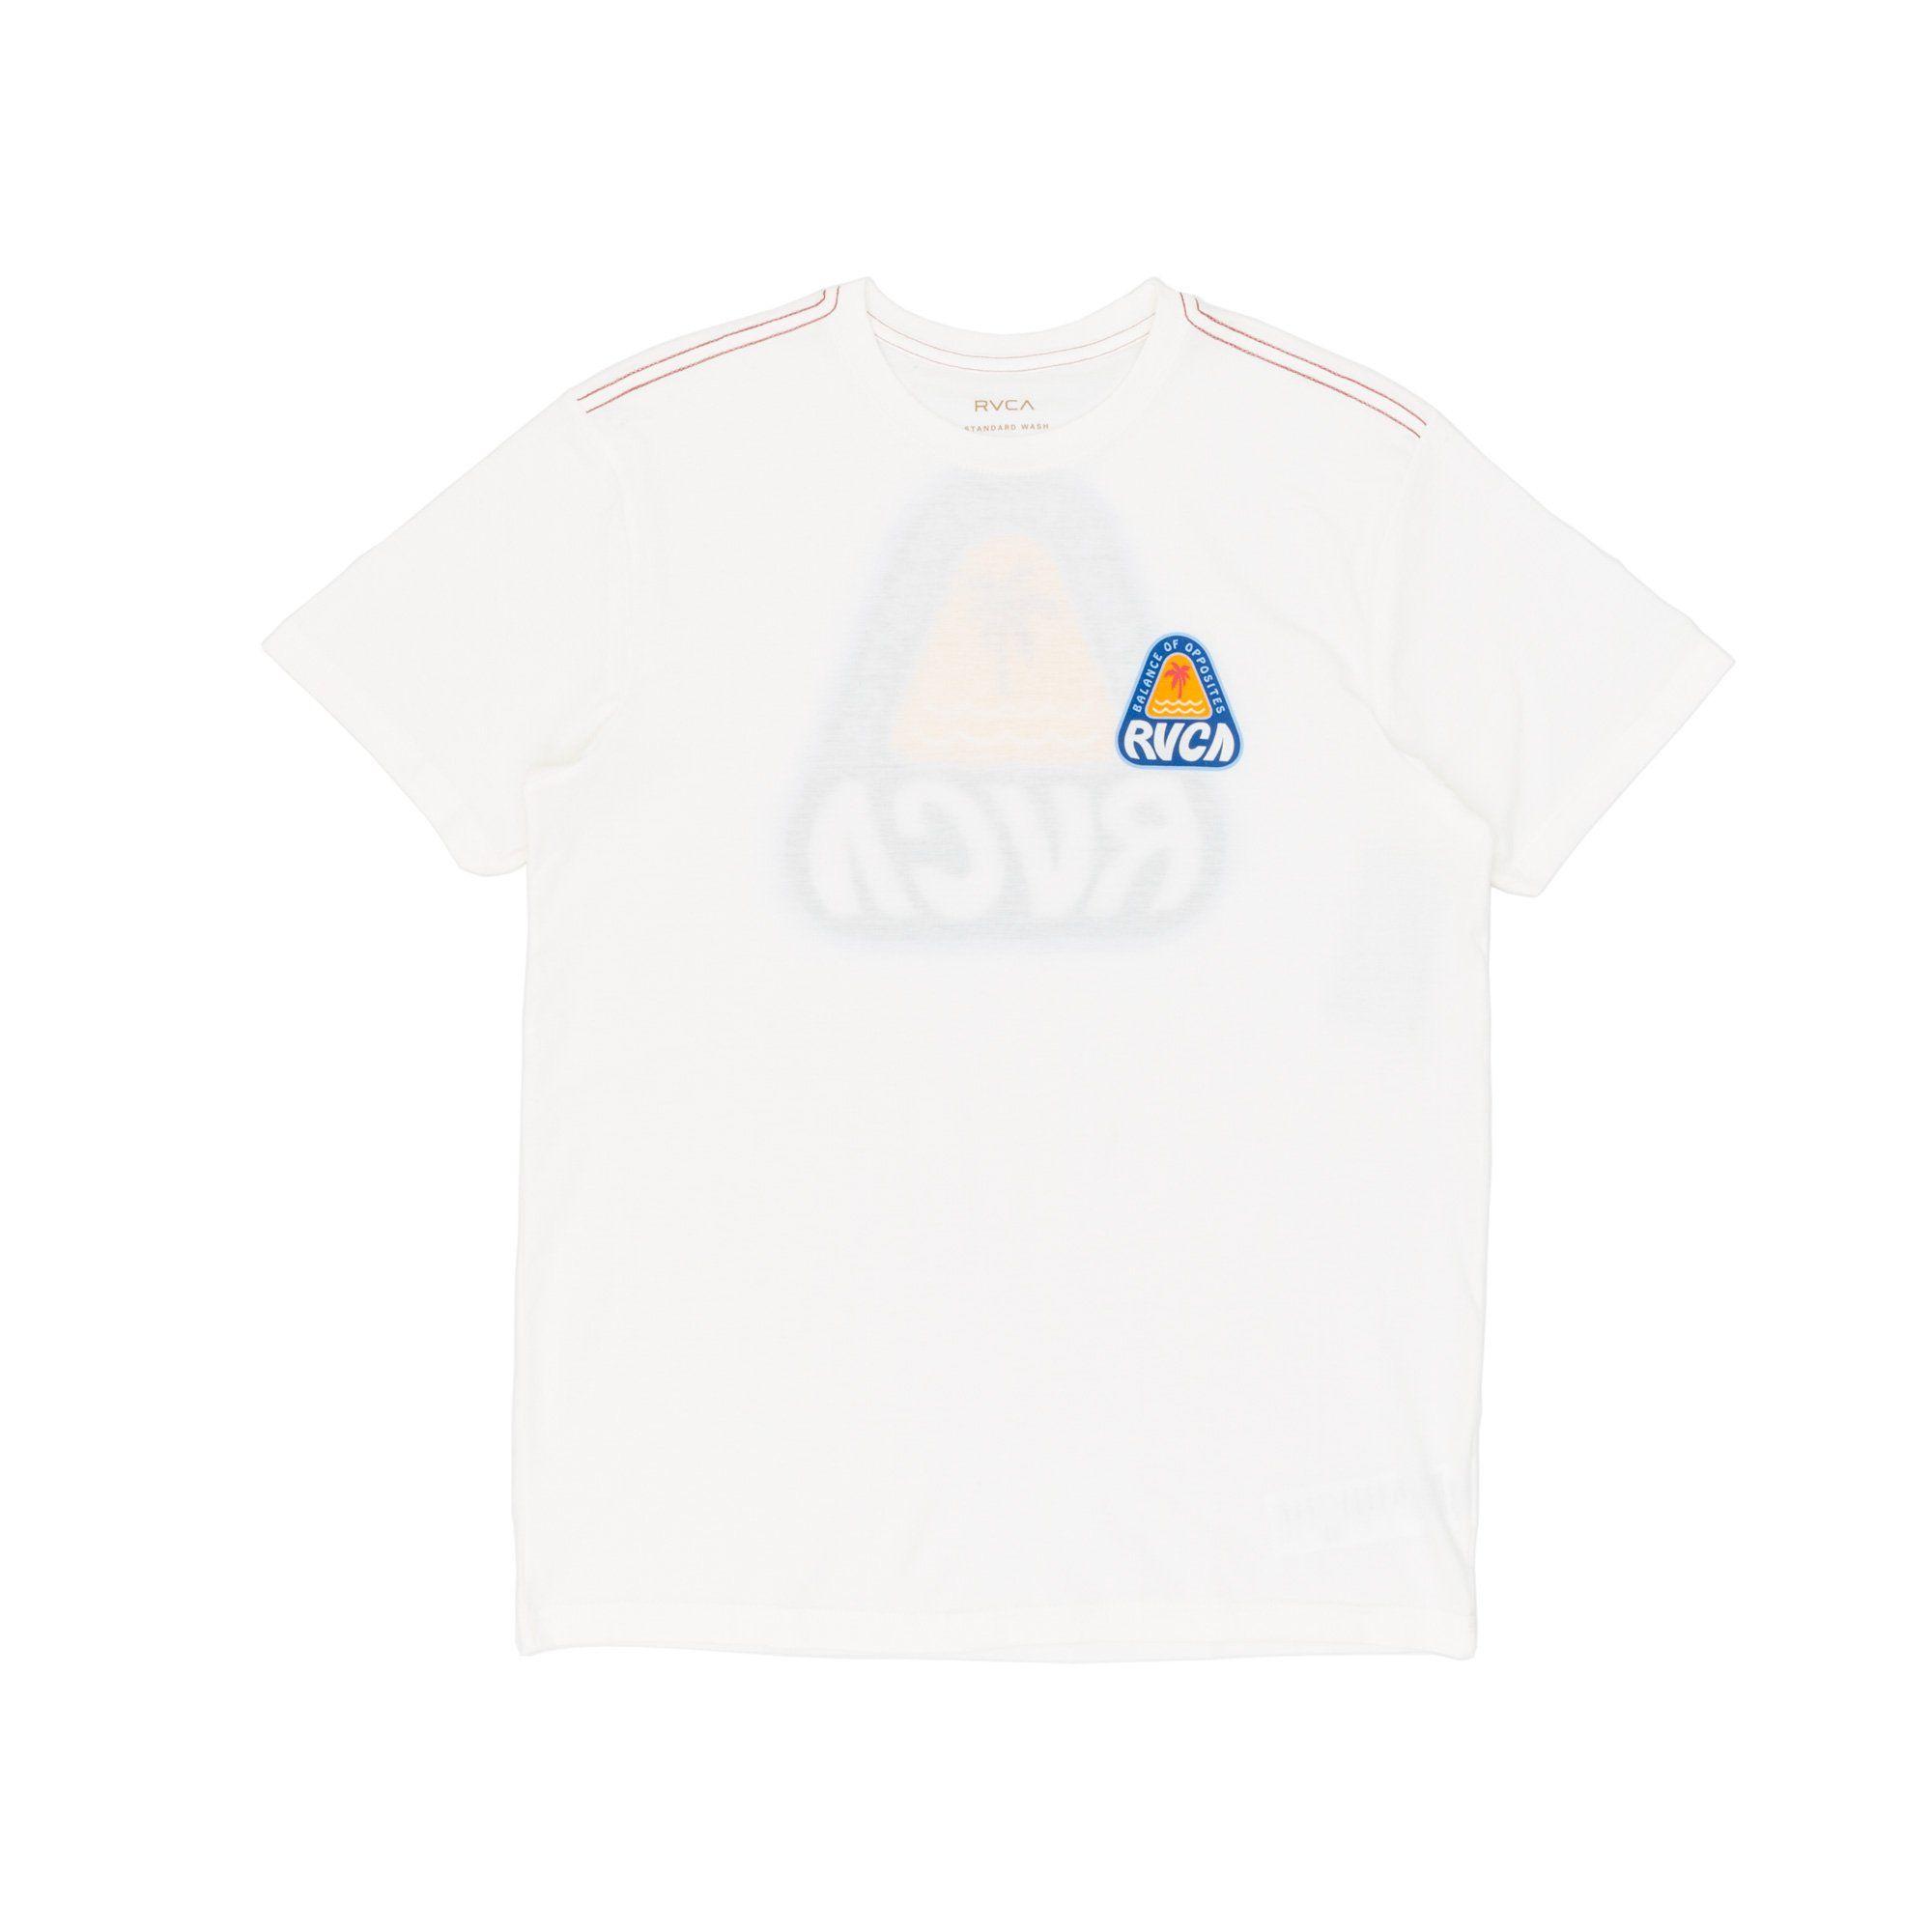 RVCA Small Logo - RVCA Castaway T Shirt White. Pretend Supply Co